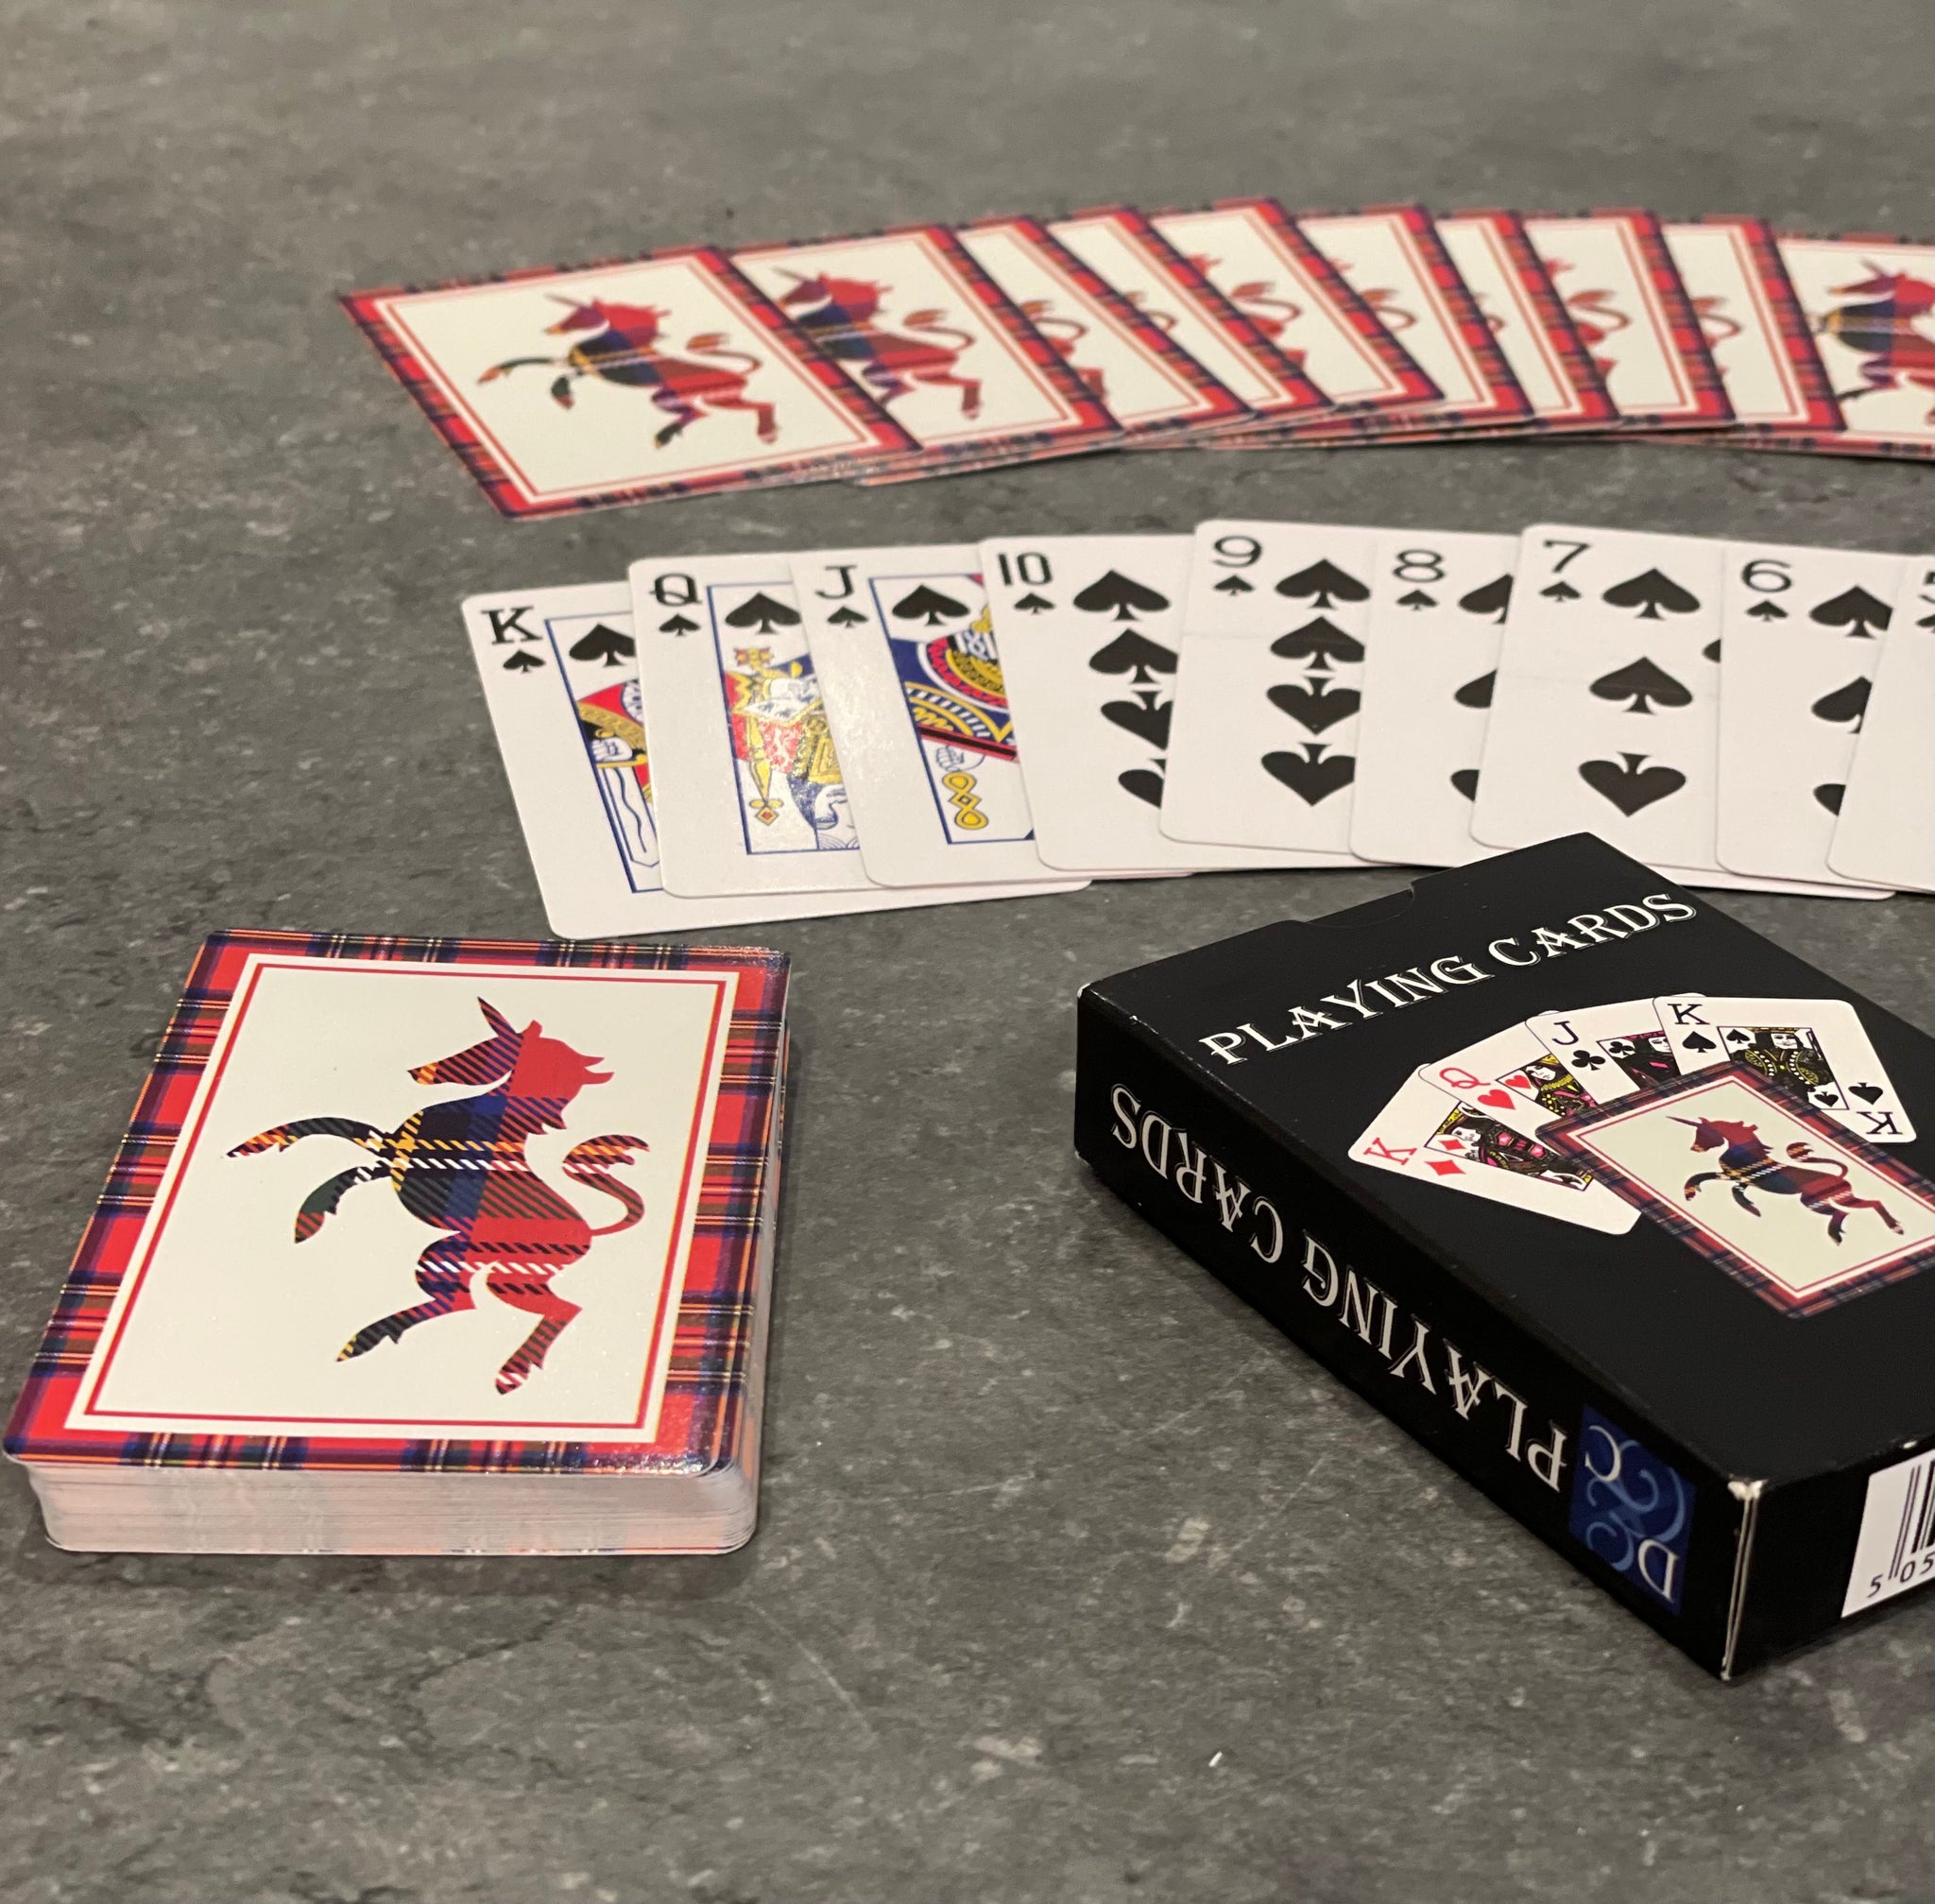 Playing cards with Tartan unicorn design